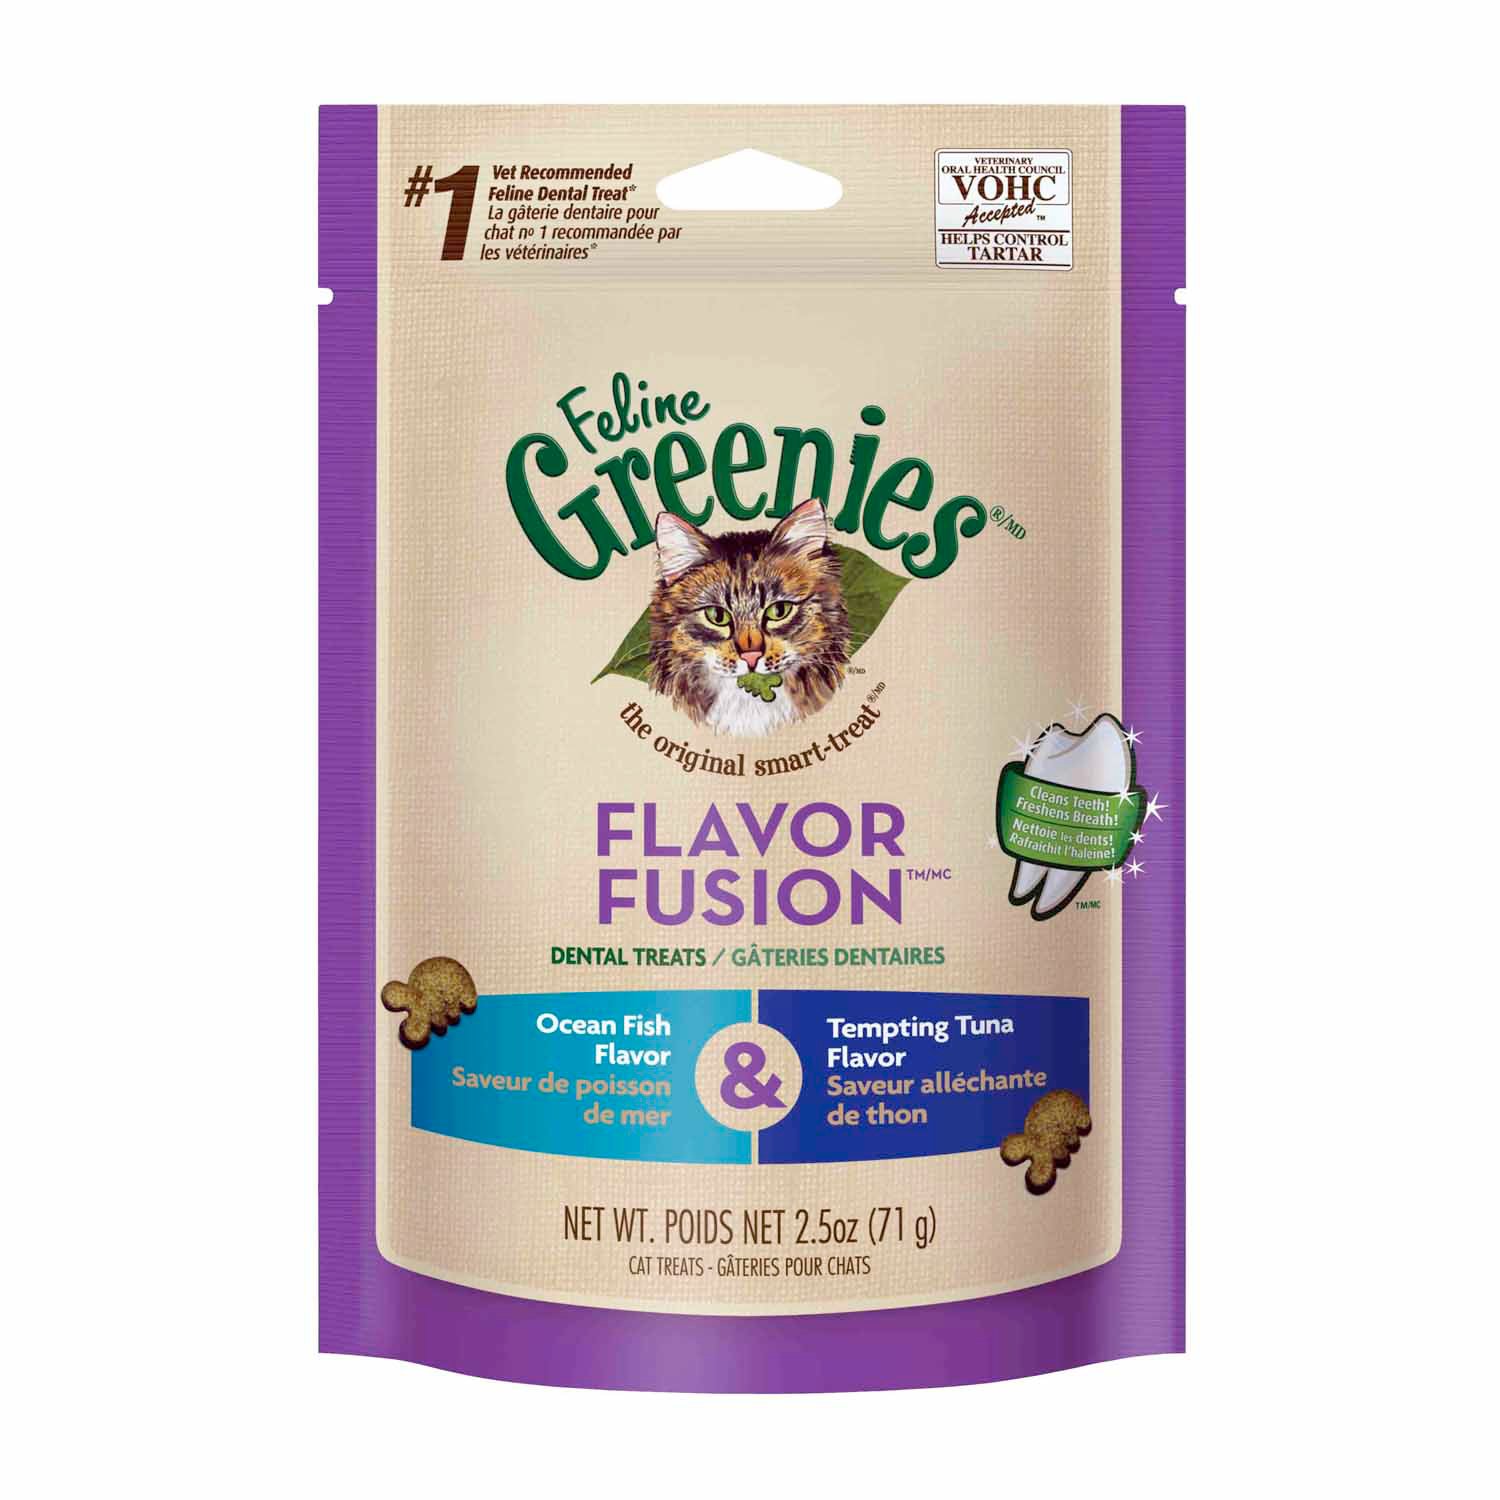 Feline Greenies Flavor Fusion Ocean Fish & Tuna Dental Cat Treats Petco